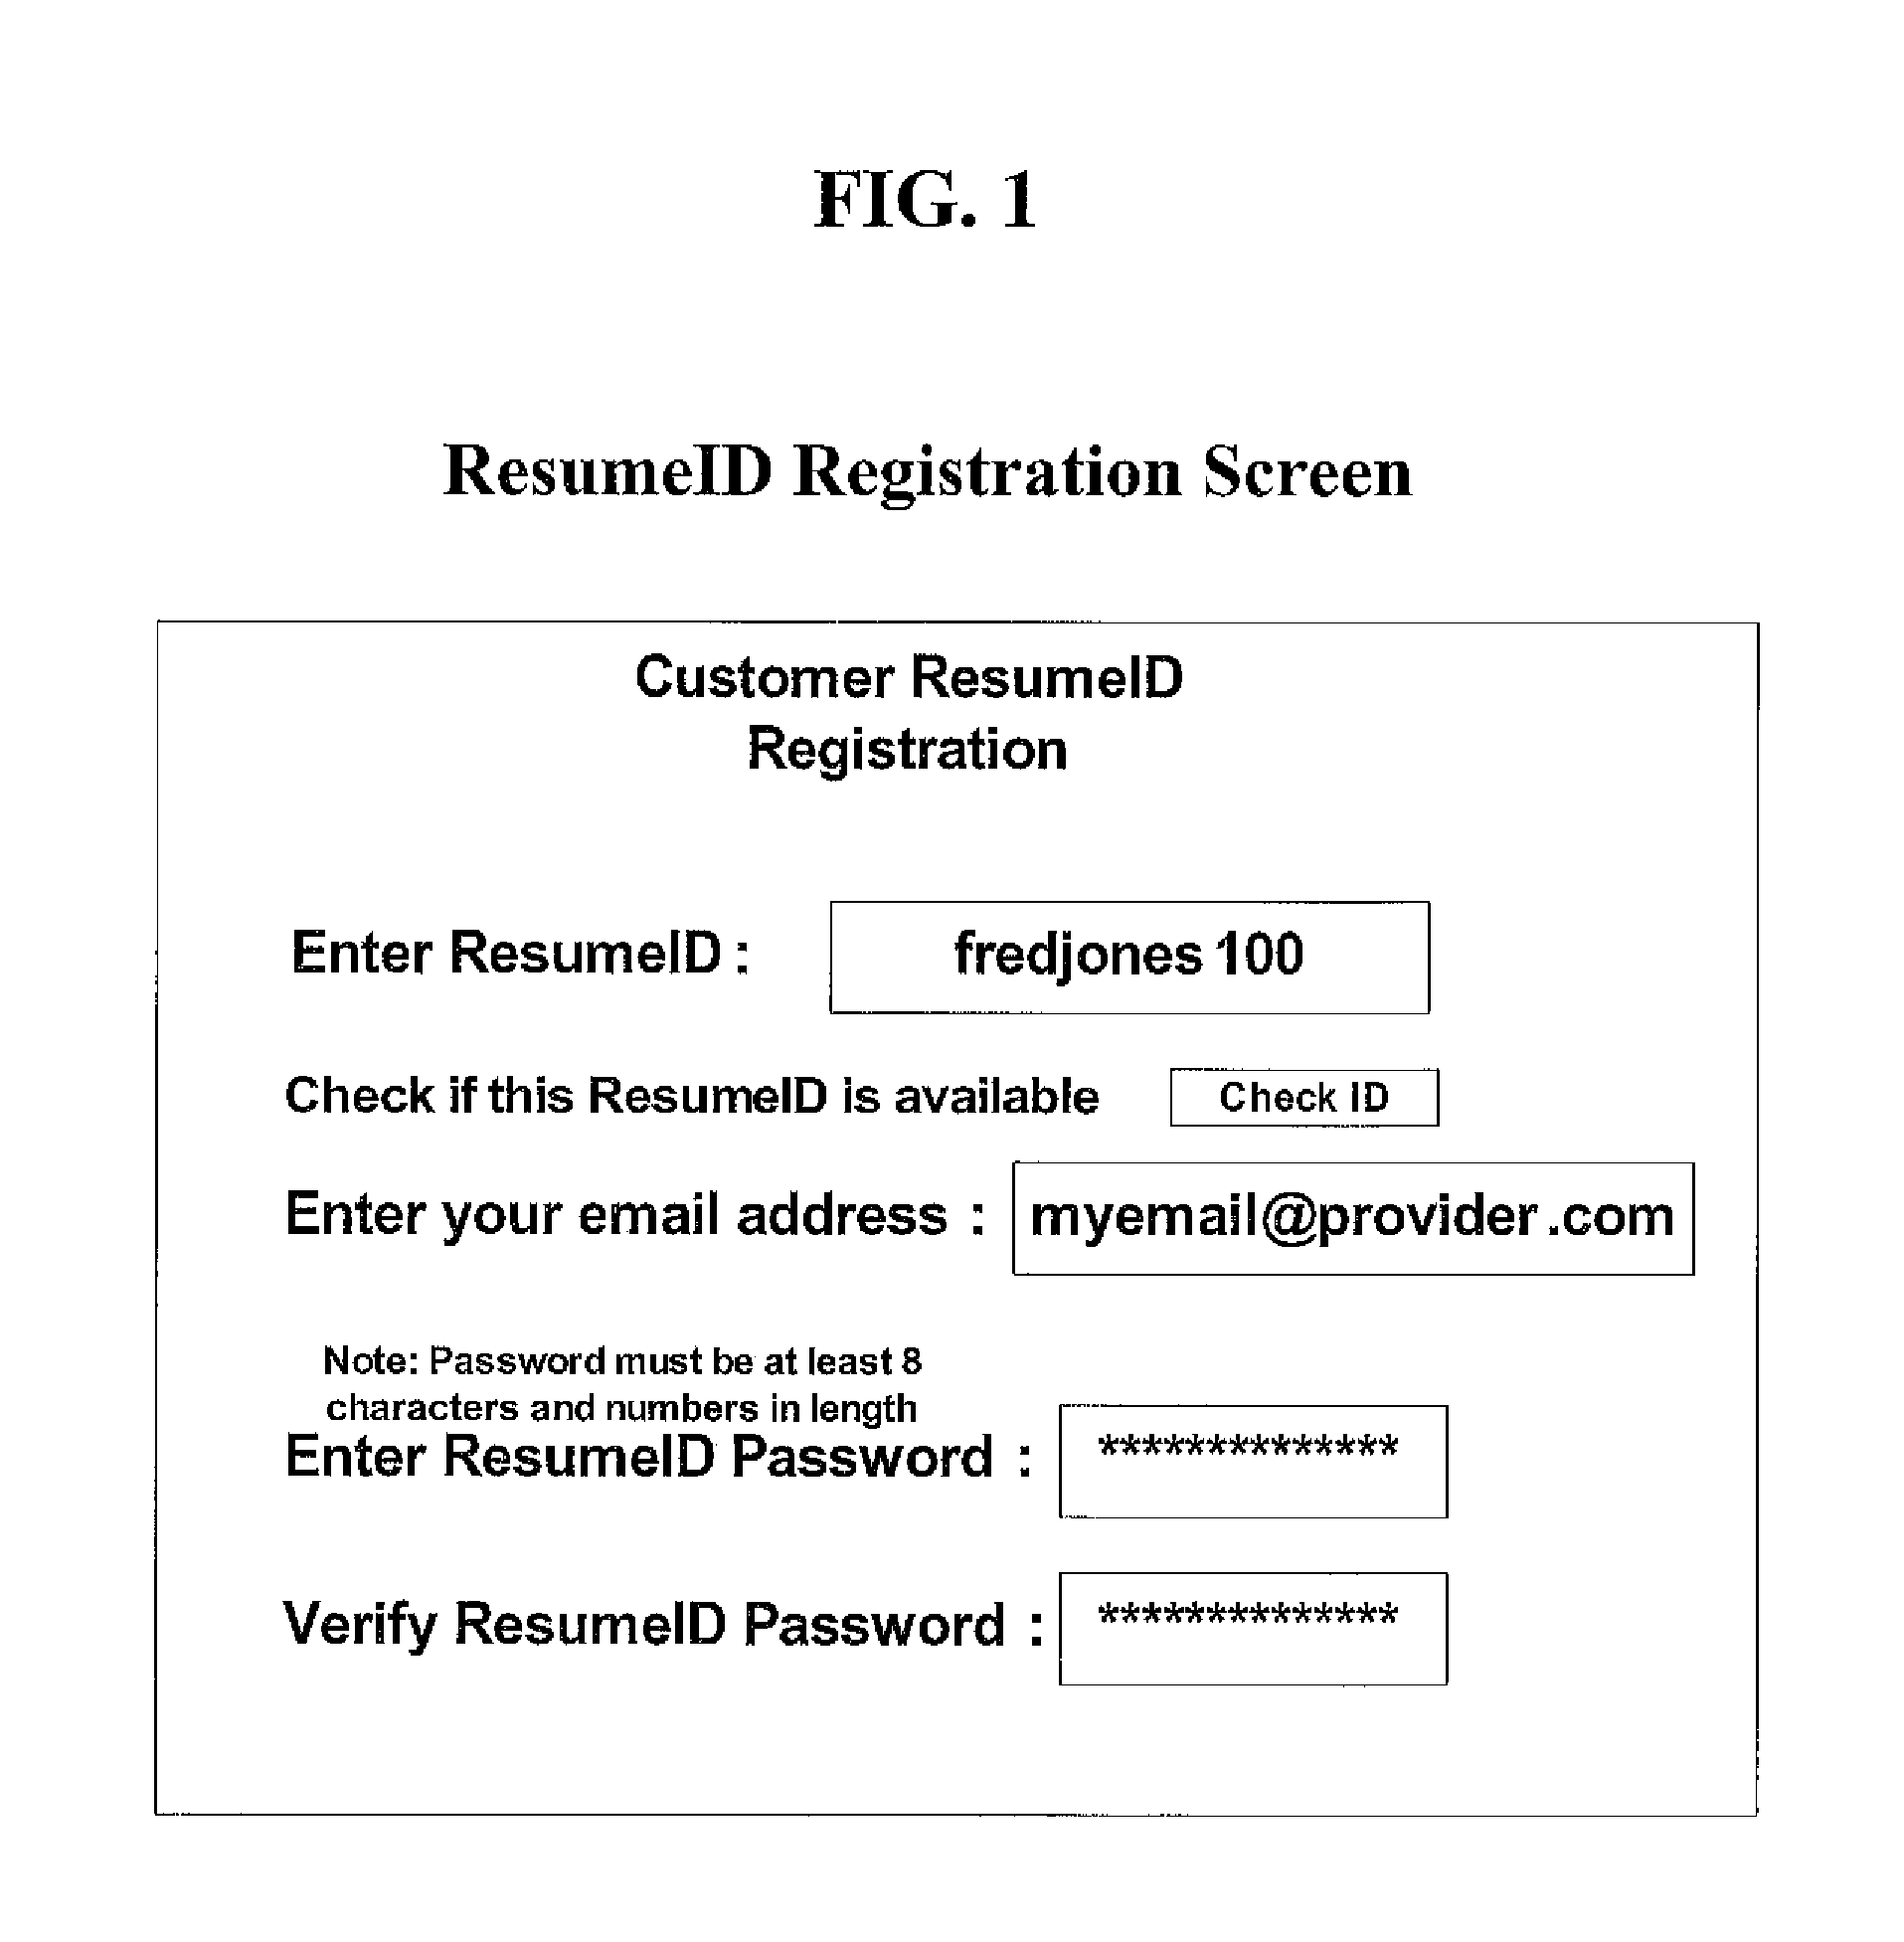 Resume ID System